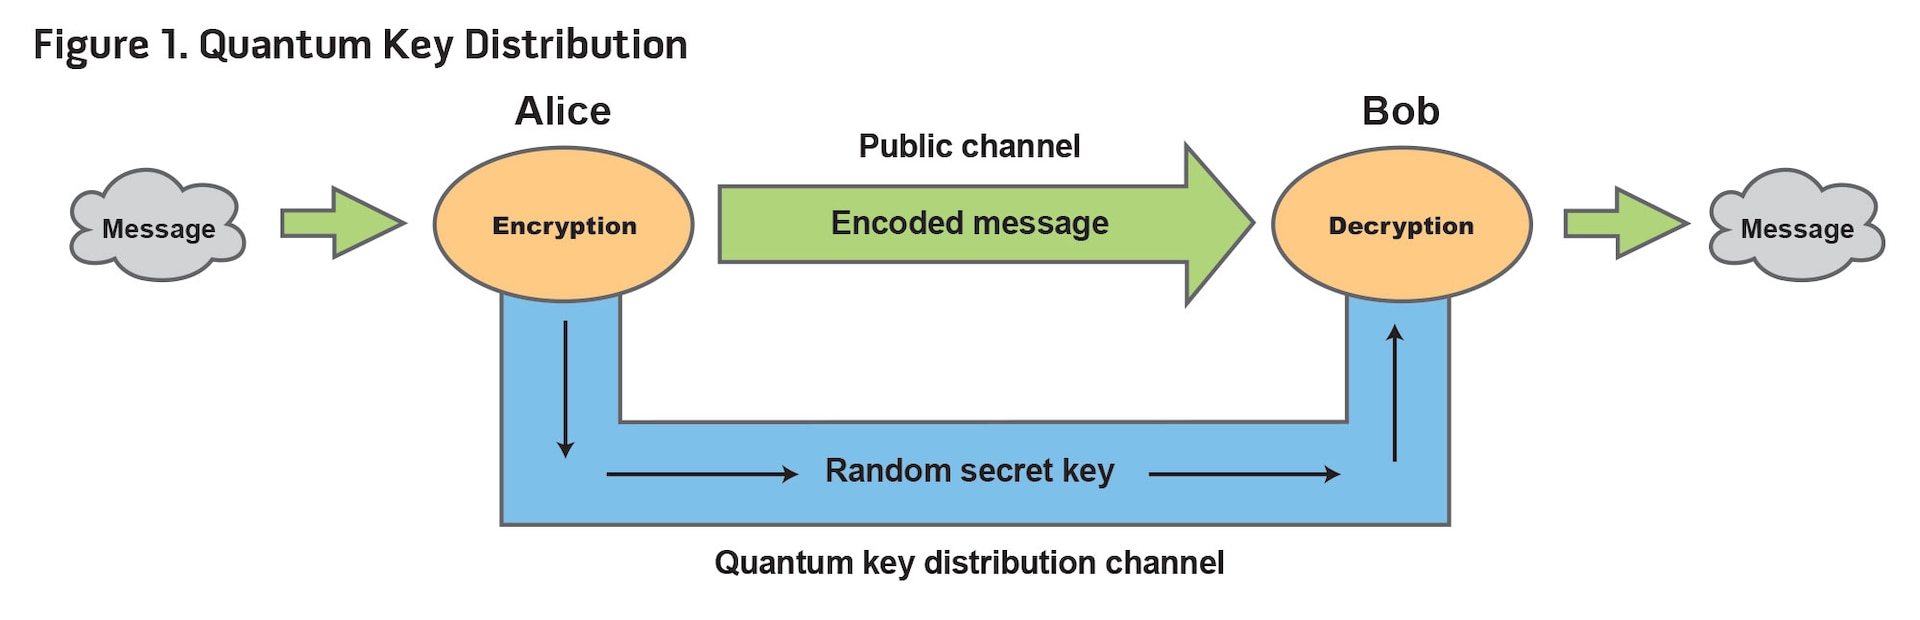 Figure 1. Quantum Key Distribution